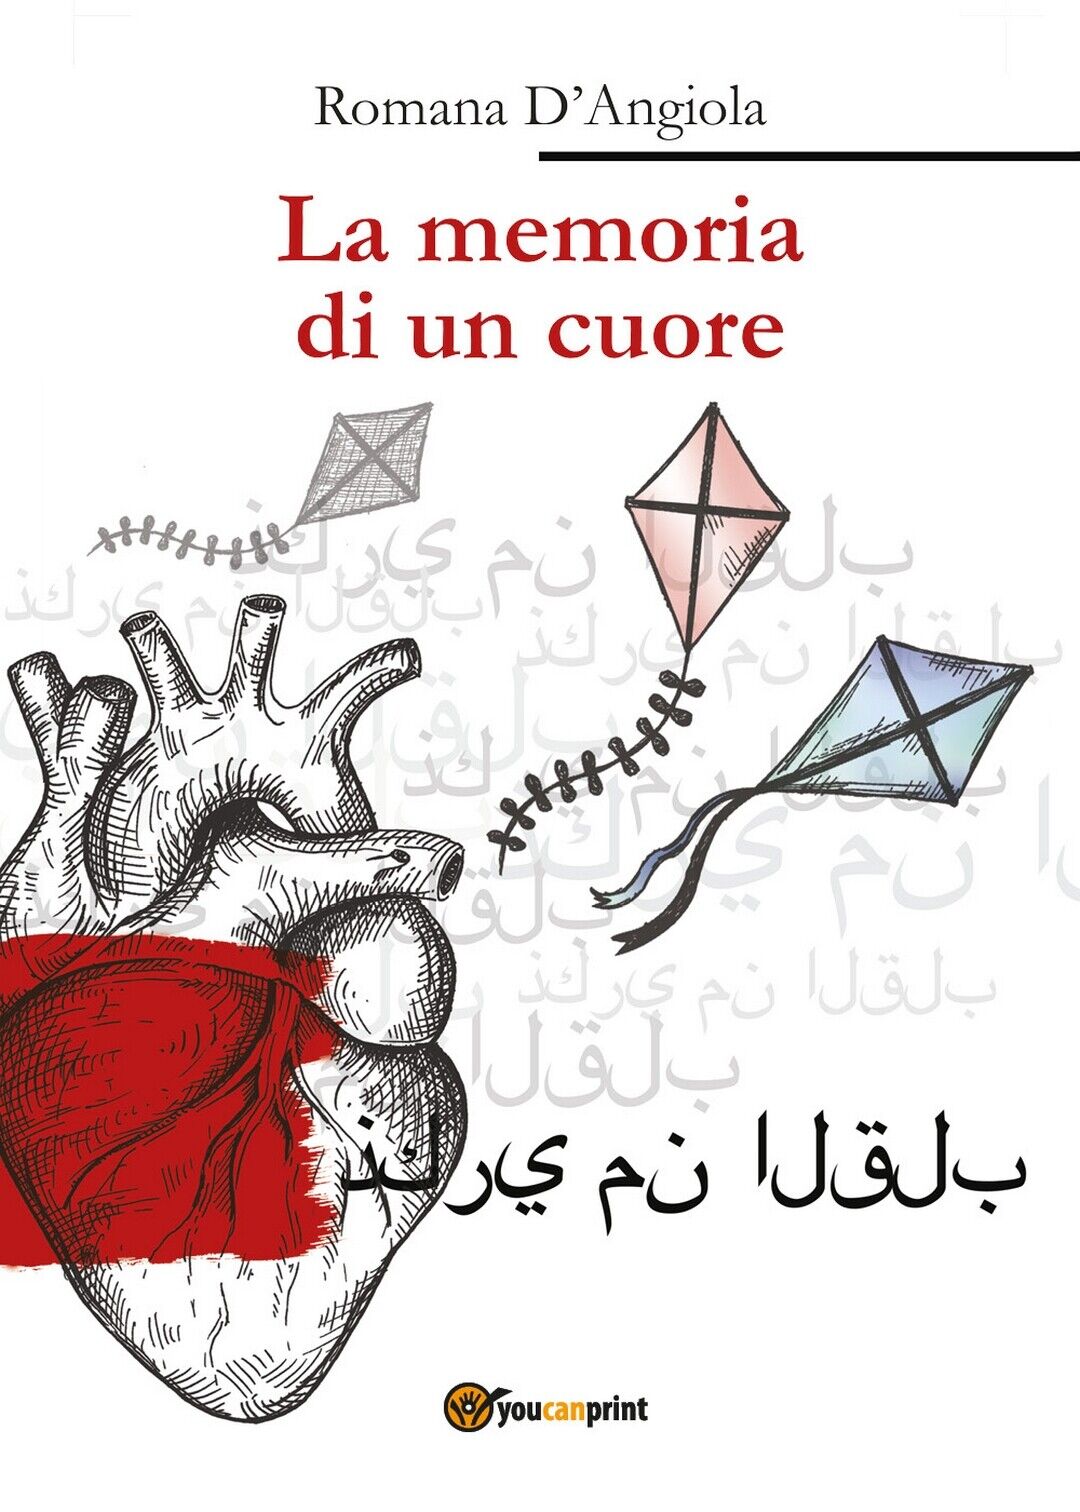 La memoria di un cuore  di Romana d'Angiola,  2019,  Youcanprint